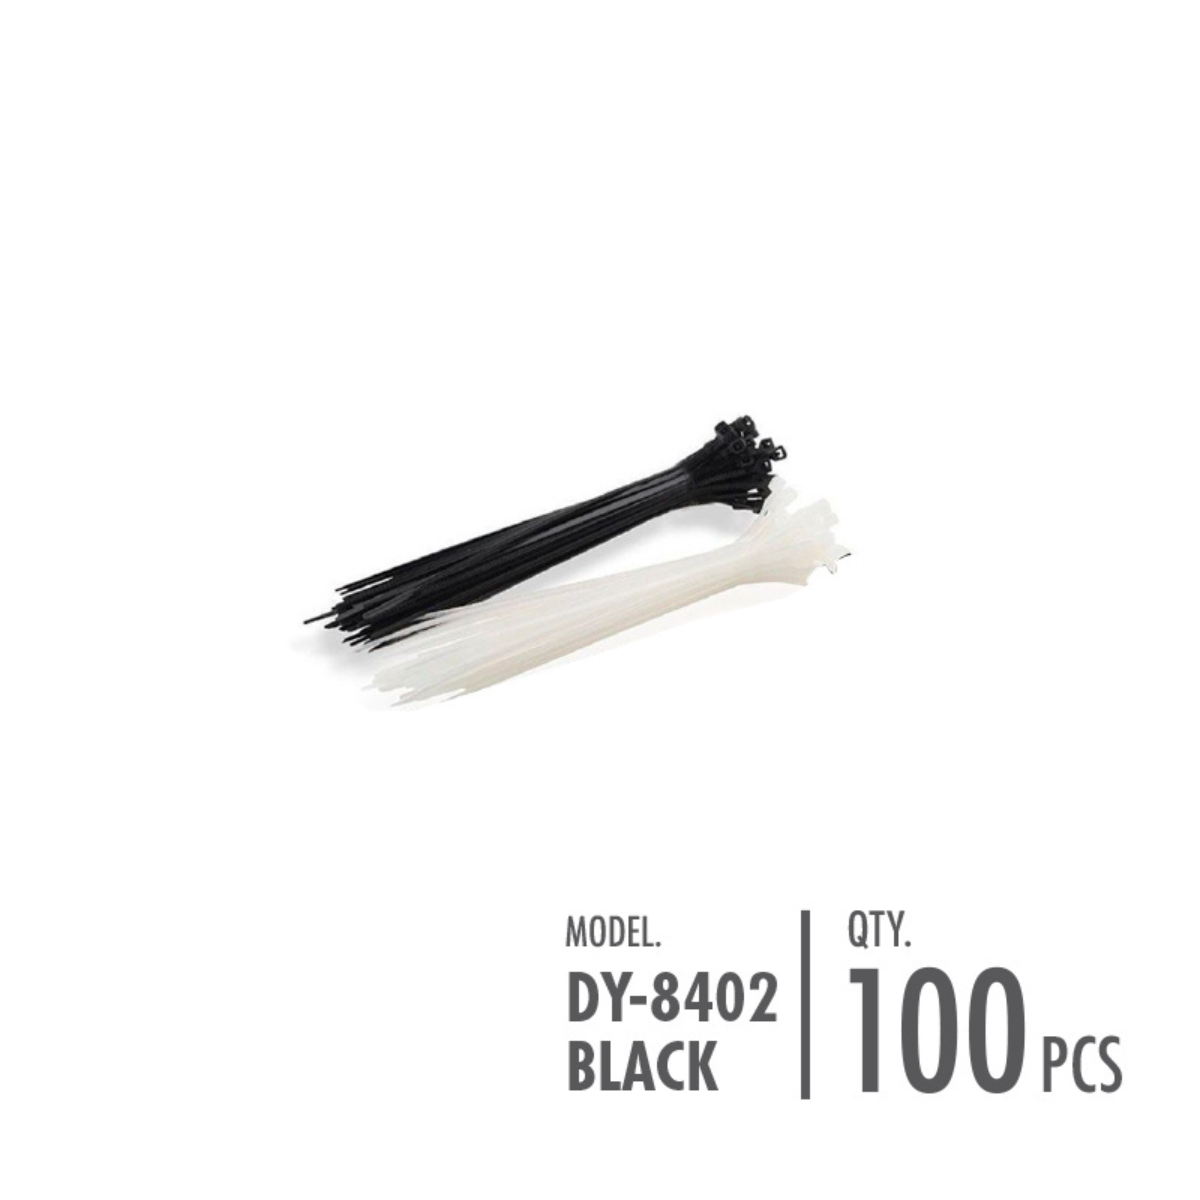 Cable Tie - Black (Dim: 0.36 x 15cm)